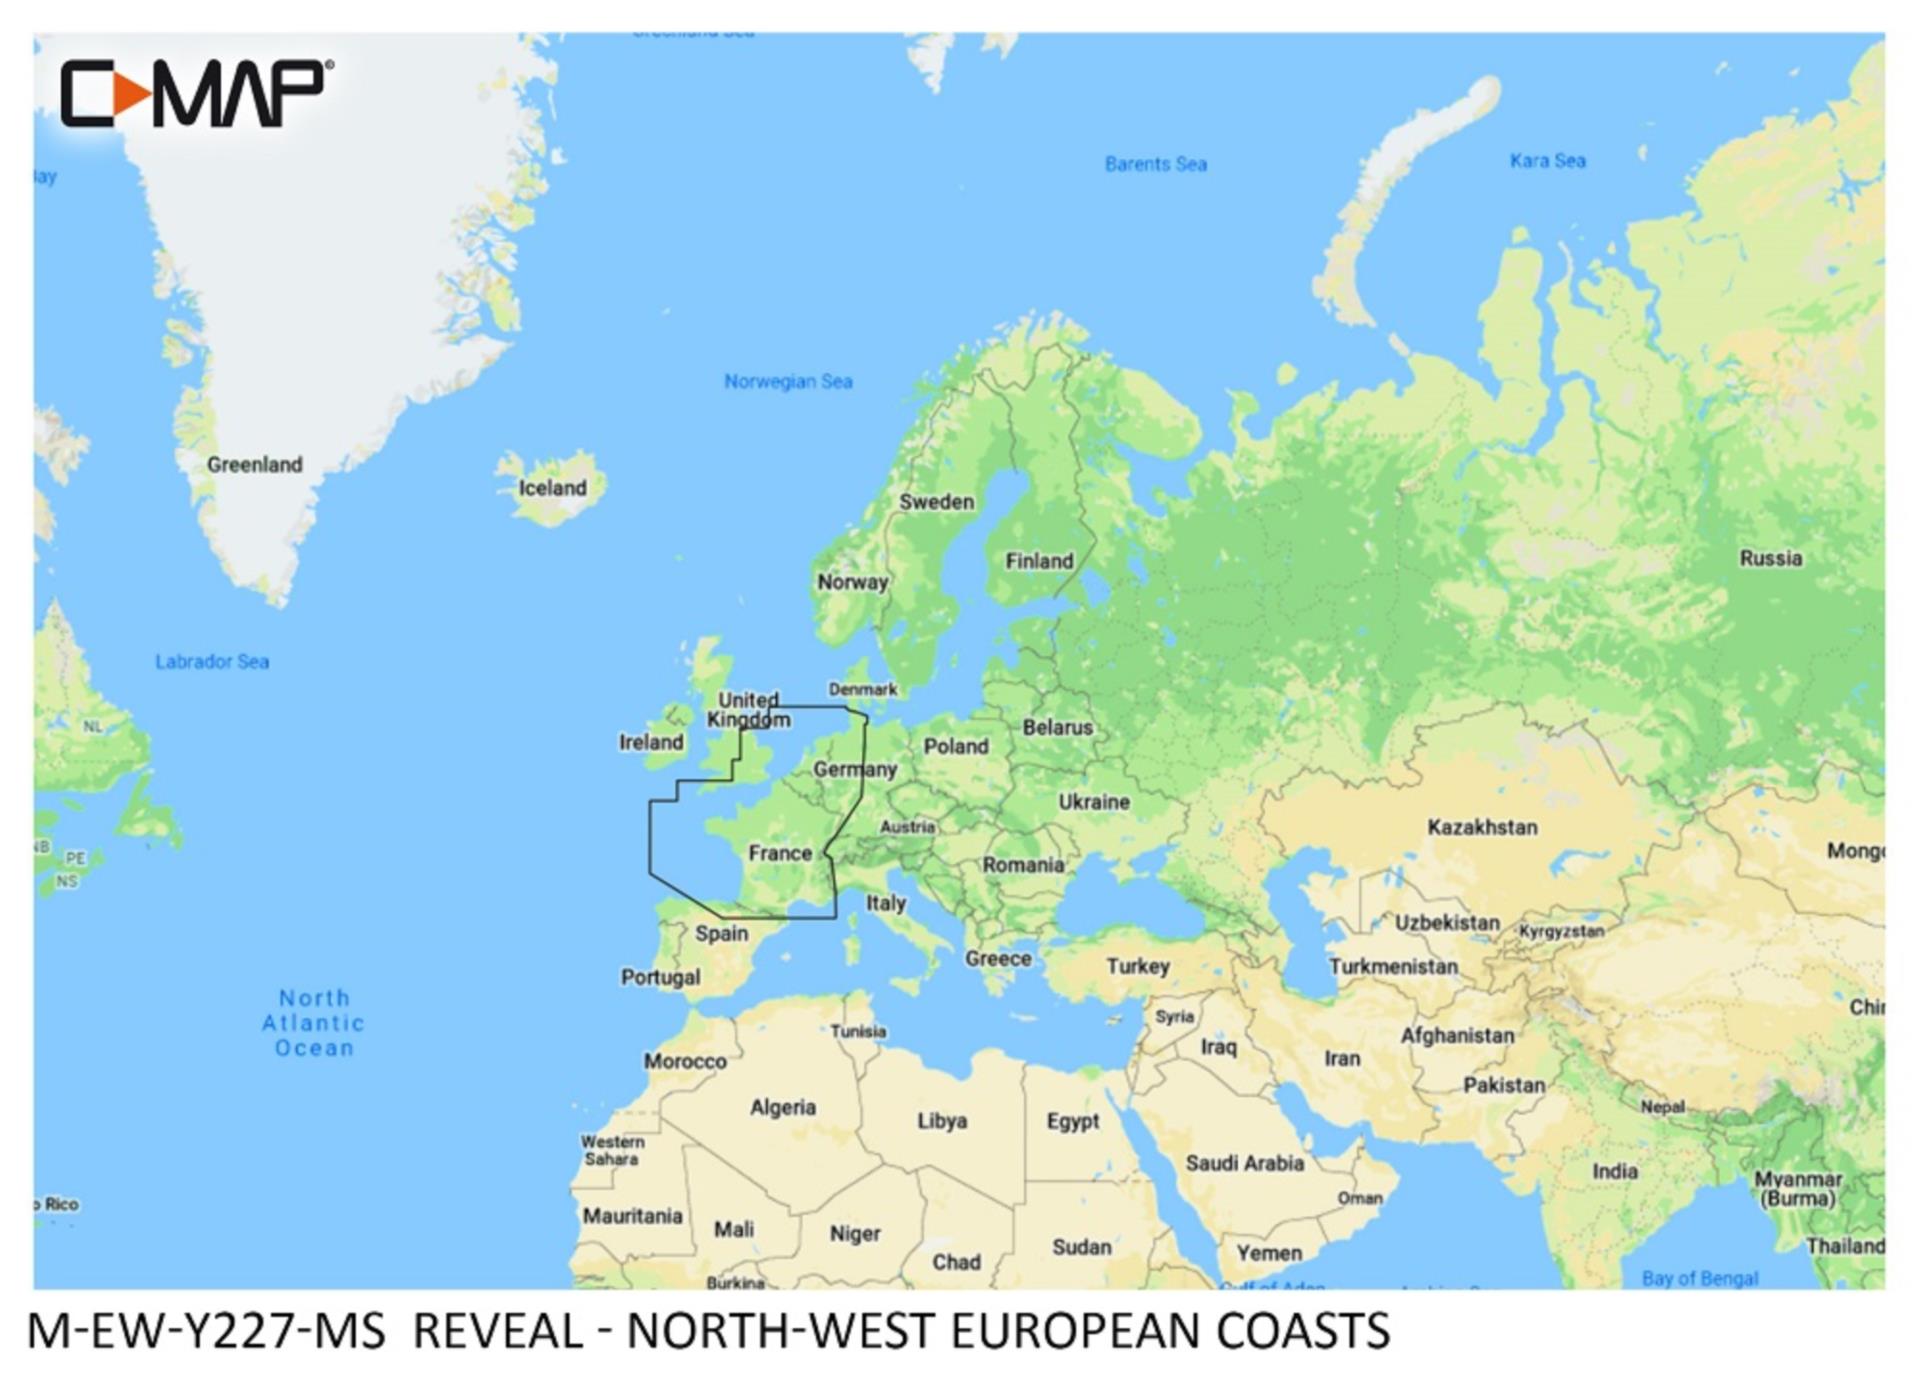 C-MAP Reveal L North-West European Coasts